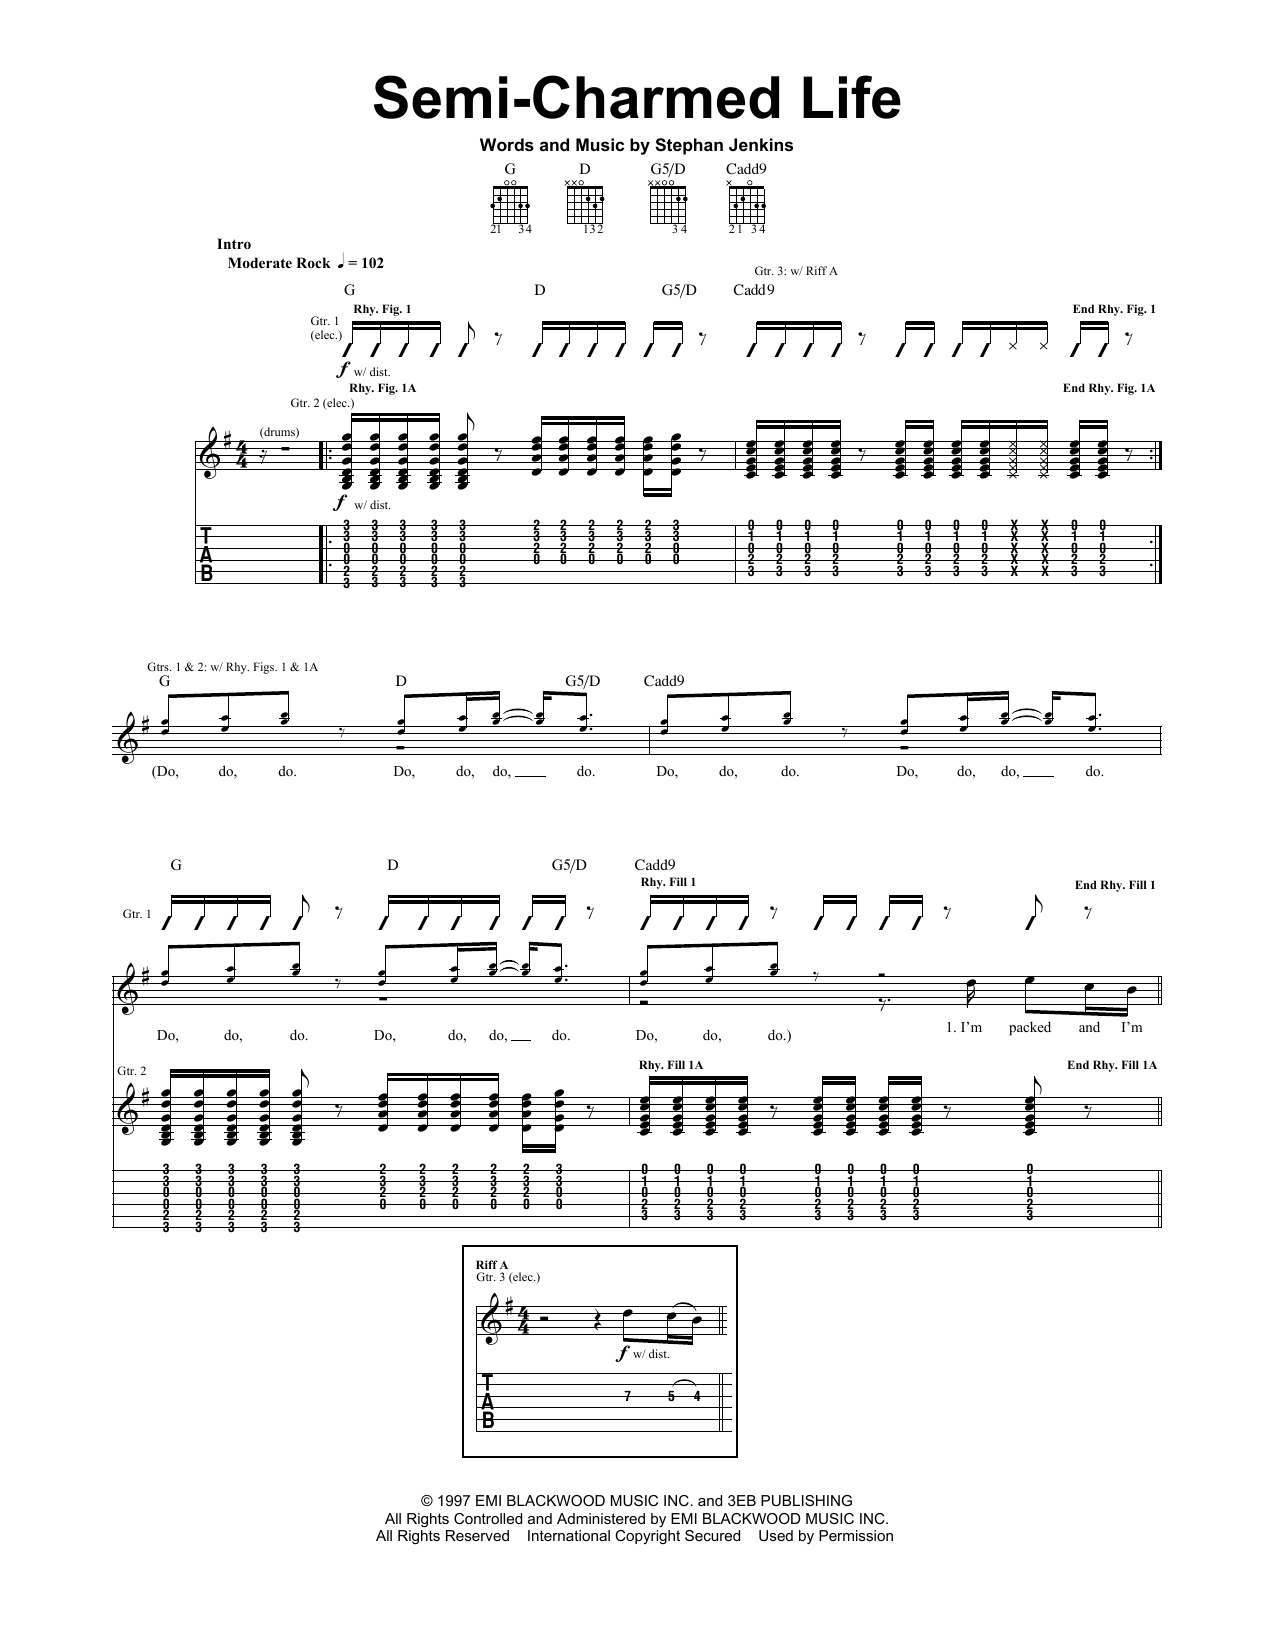 Third Eye Blind Semi-Charmed Life Sheet Music Notes & Chords for Guitar Tab - Download or Print PDF